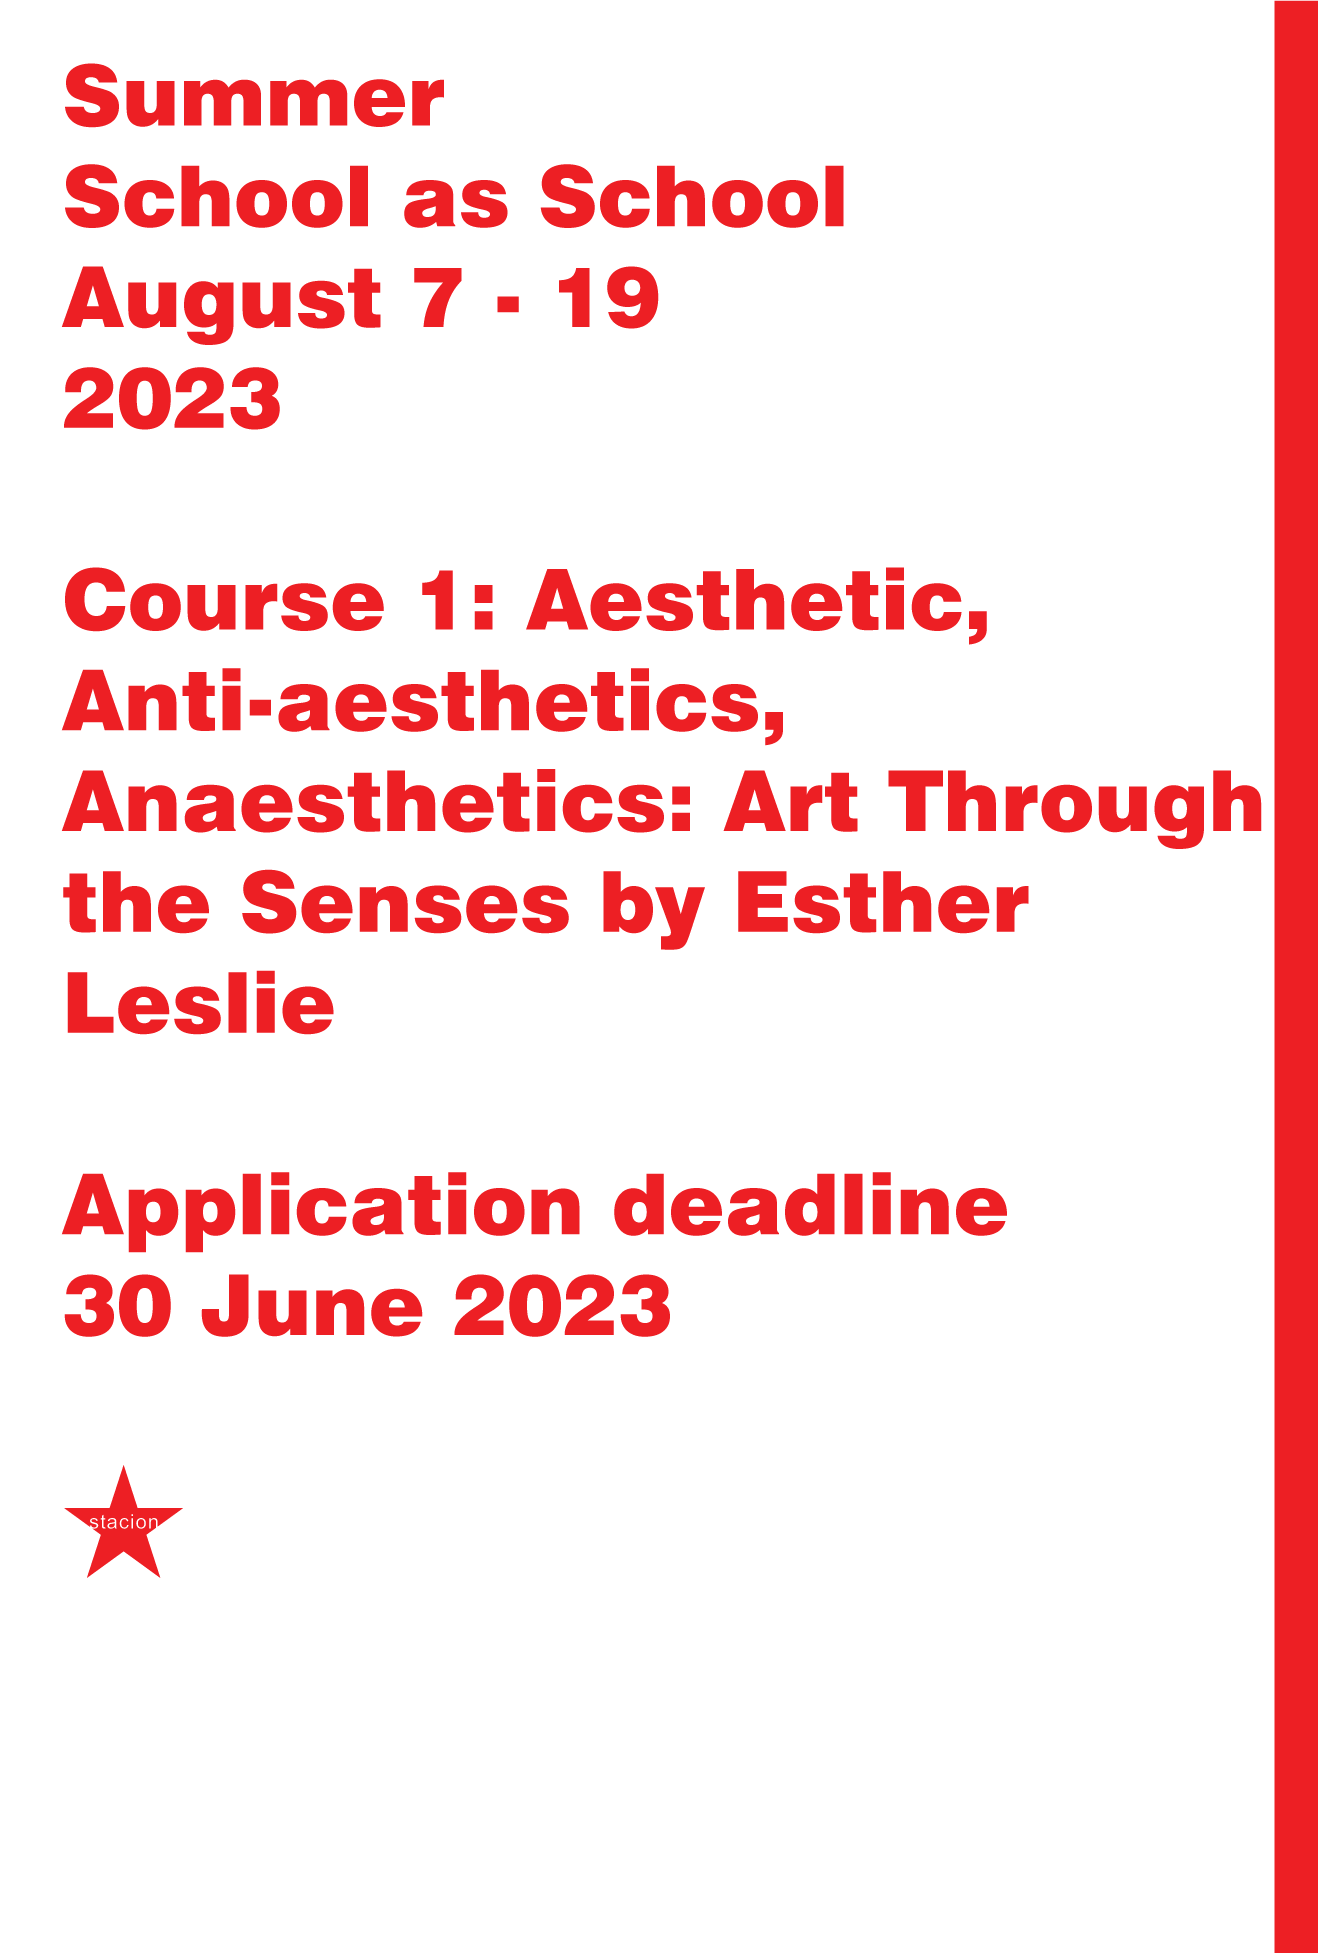 Course 1: Aesthetic, Anti-aesthetics, Anaesthetics: Art Through the Senses